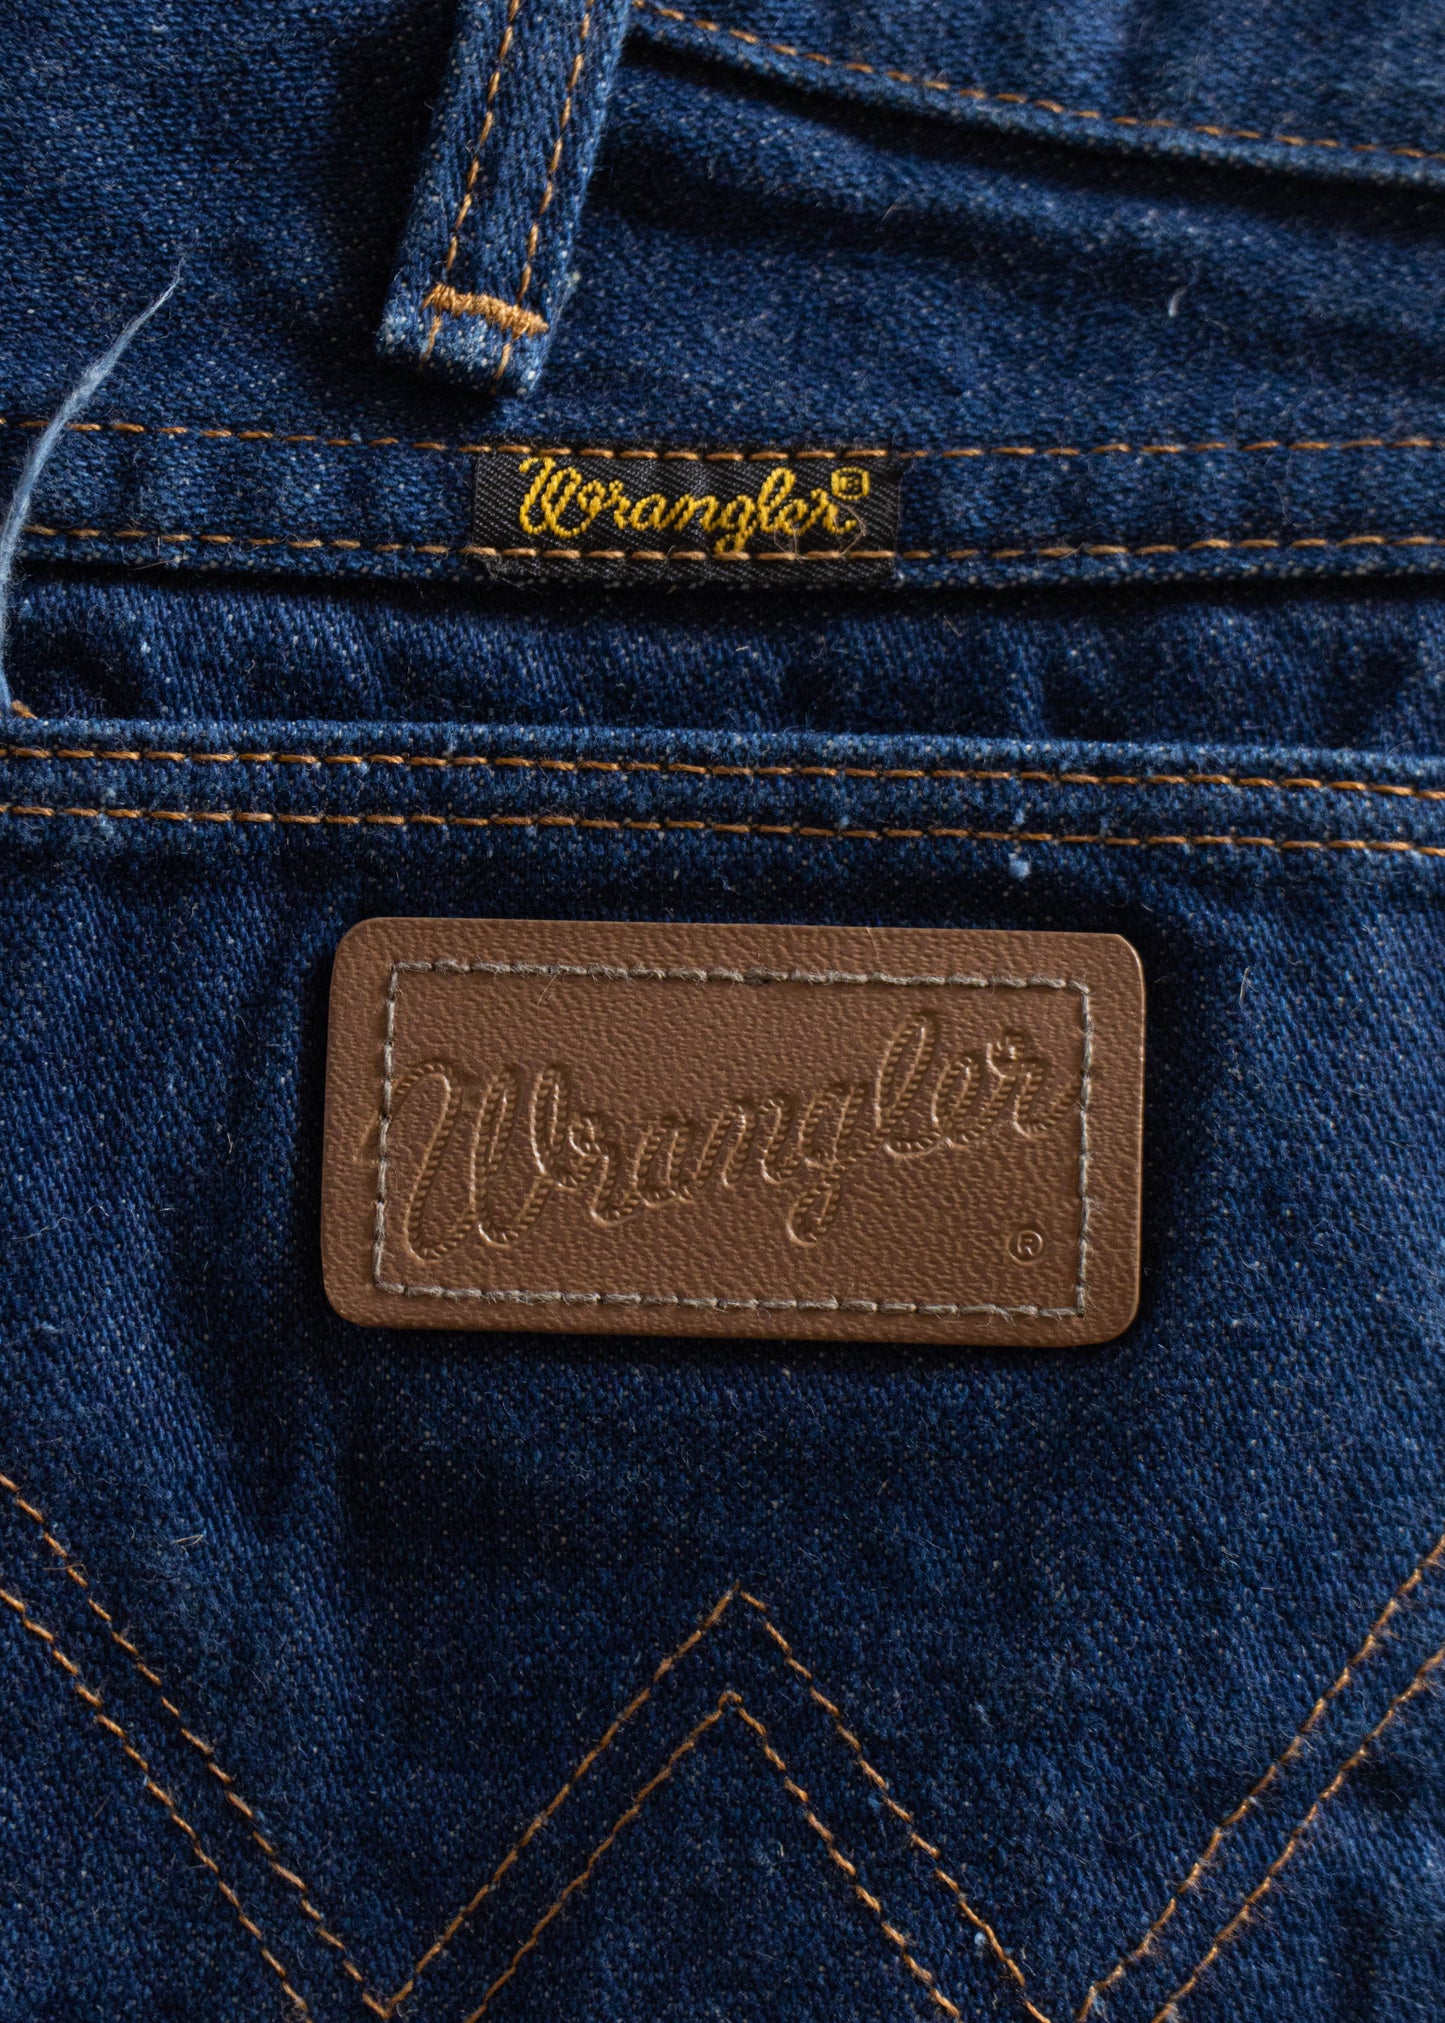 1980s Wrangler Darkwash Jeans Size Women's 30 Men's 32